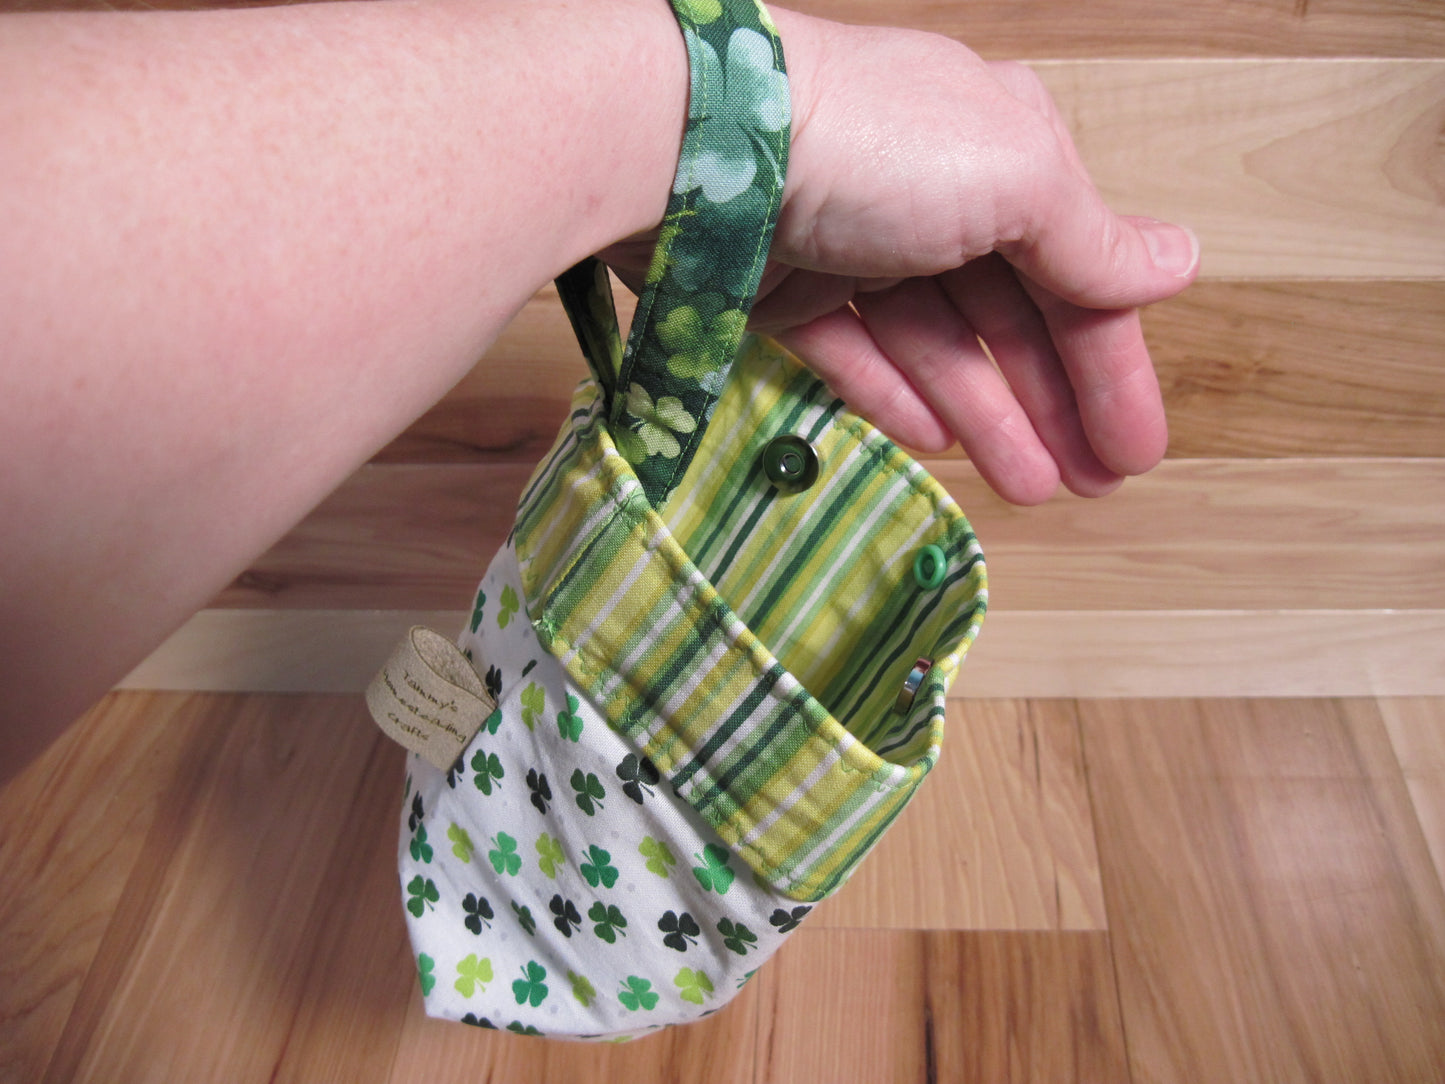 Wrist-Yarn bag St. Patty's Day white w/ shamrocks & stripes/ shamrock handle